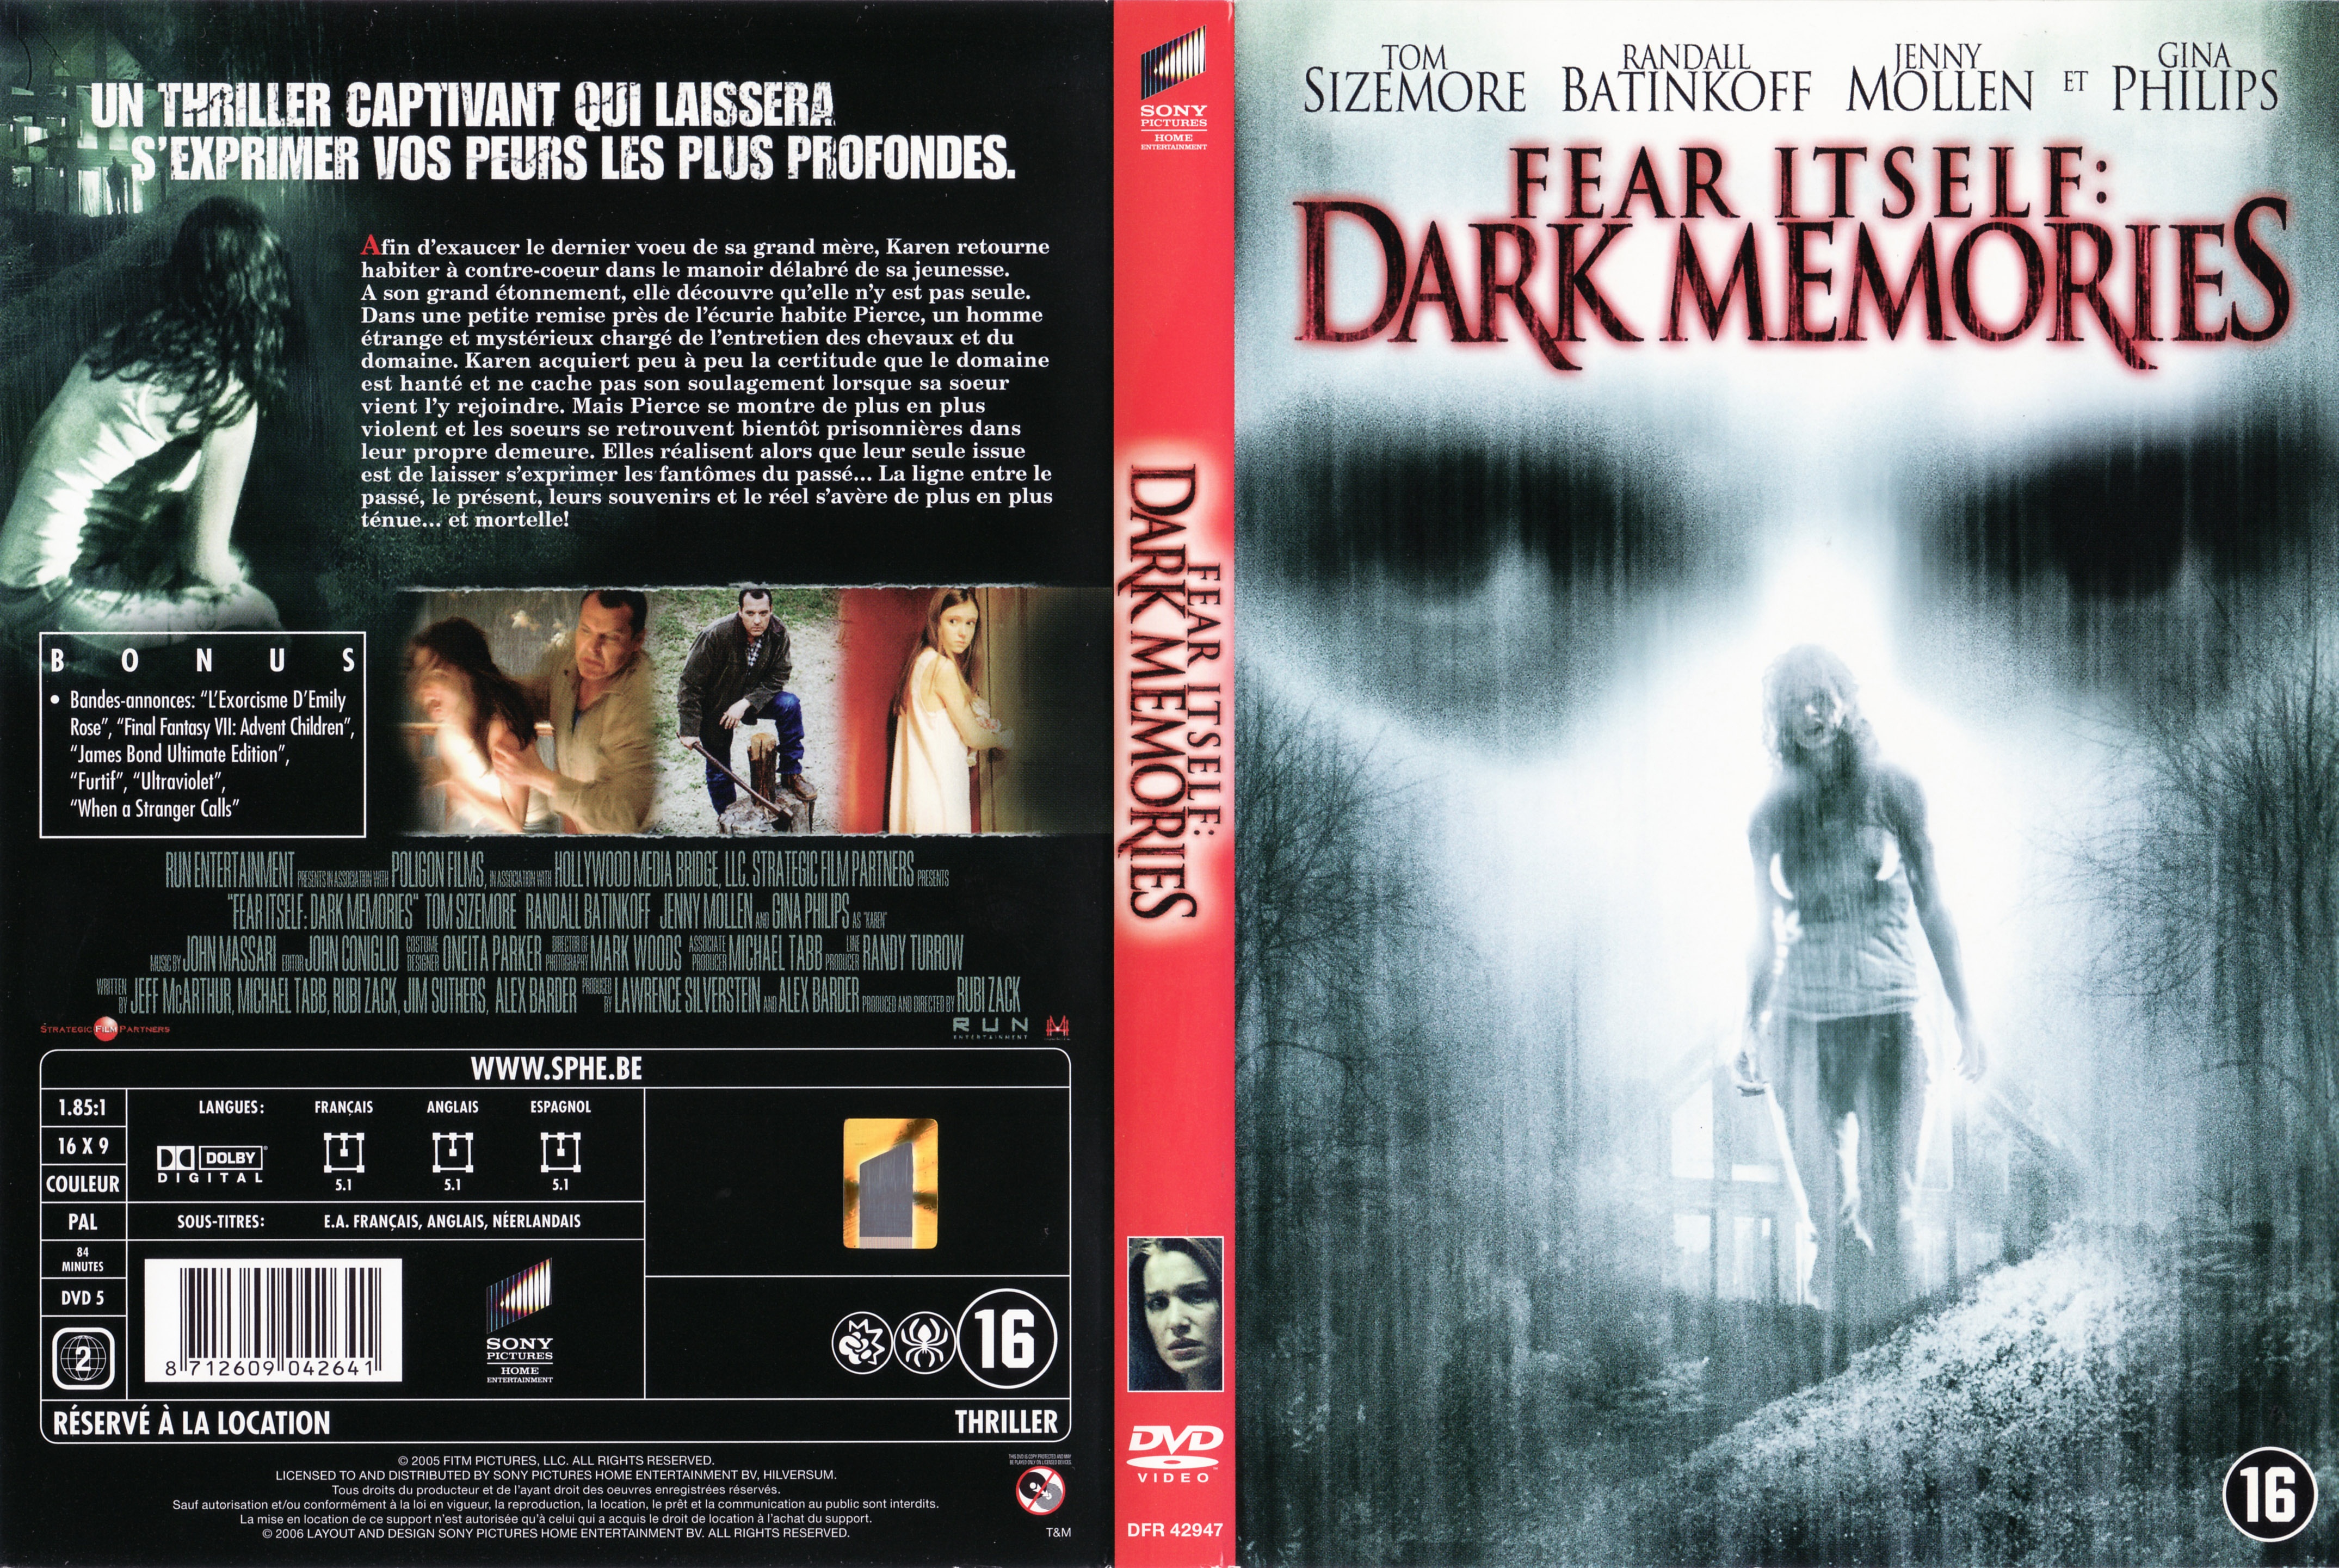 Jaquette DVD Dark memories v2